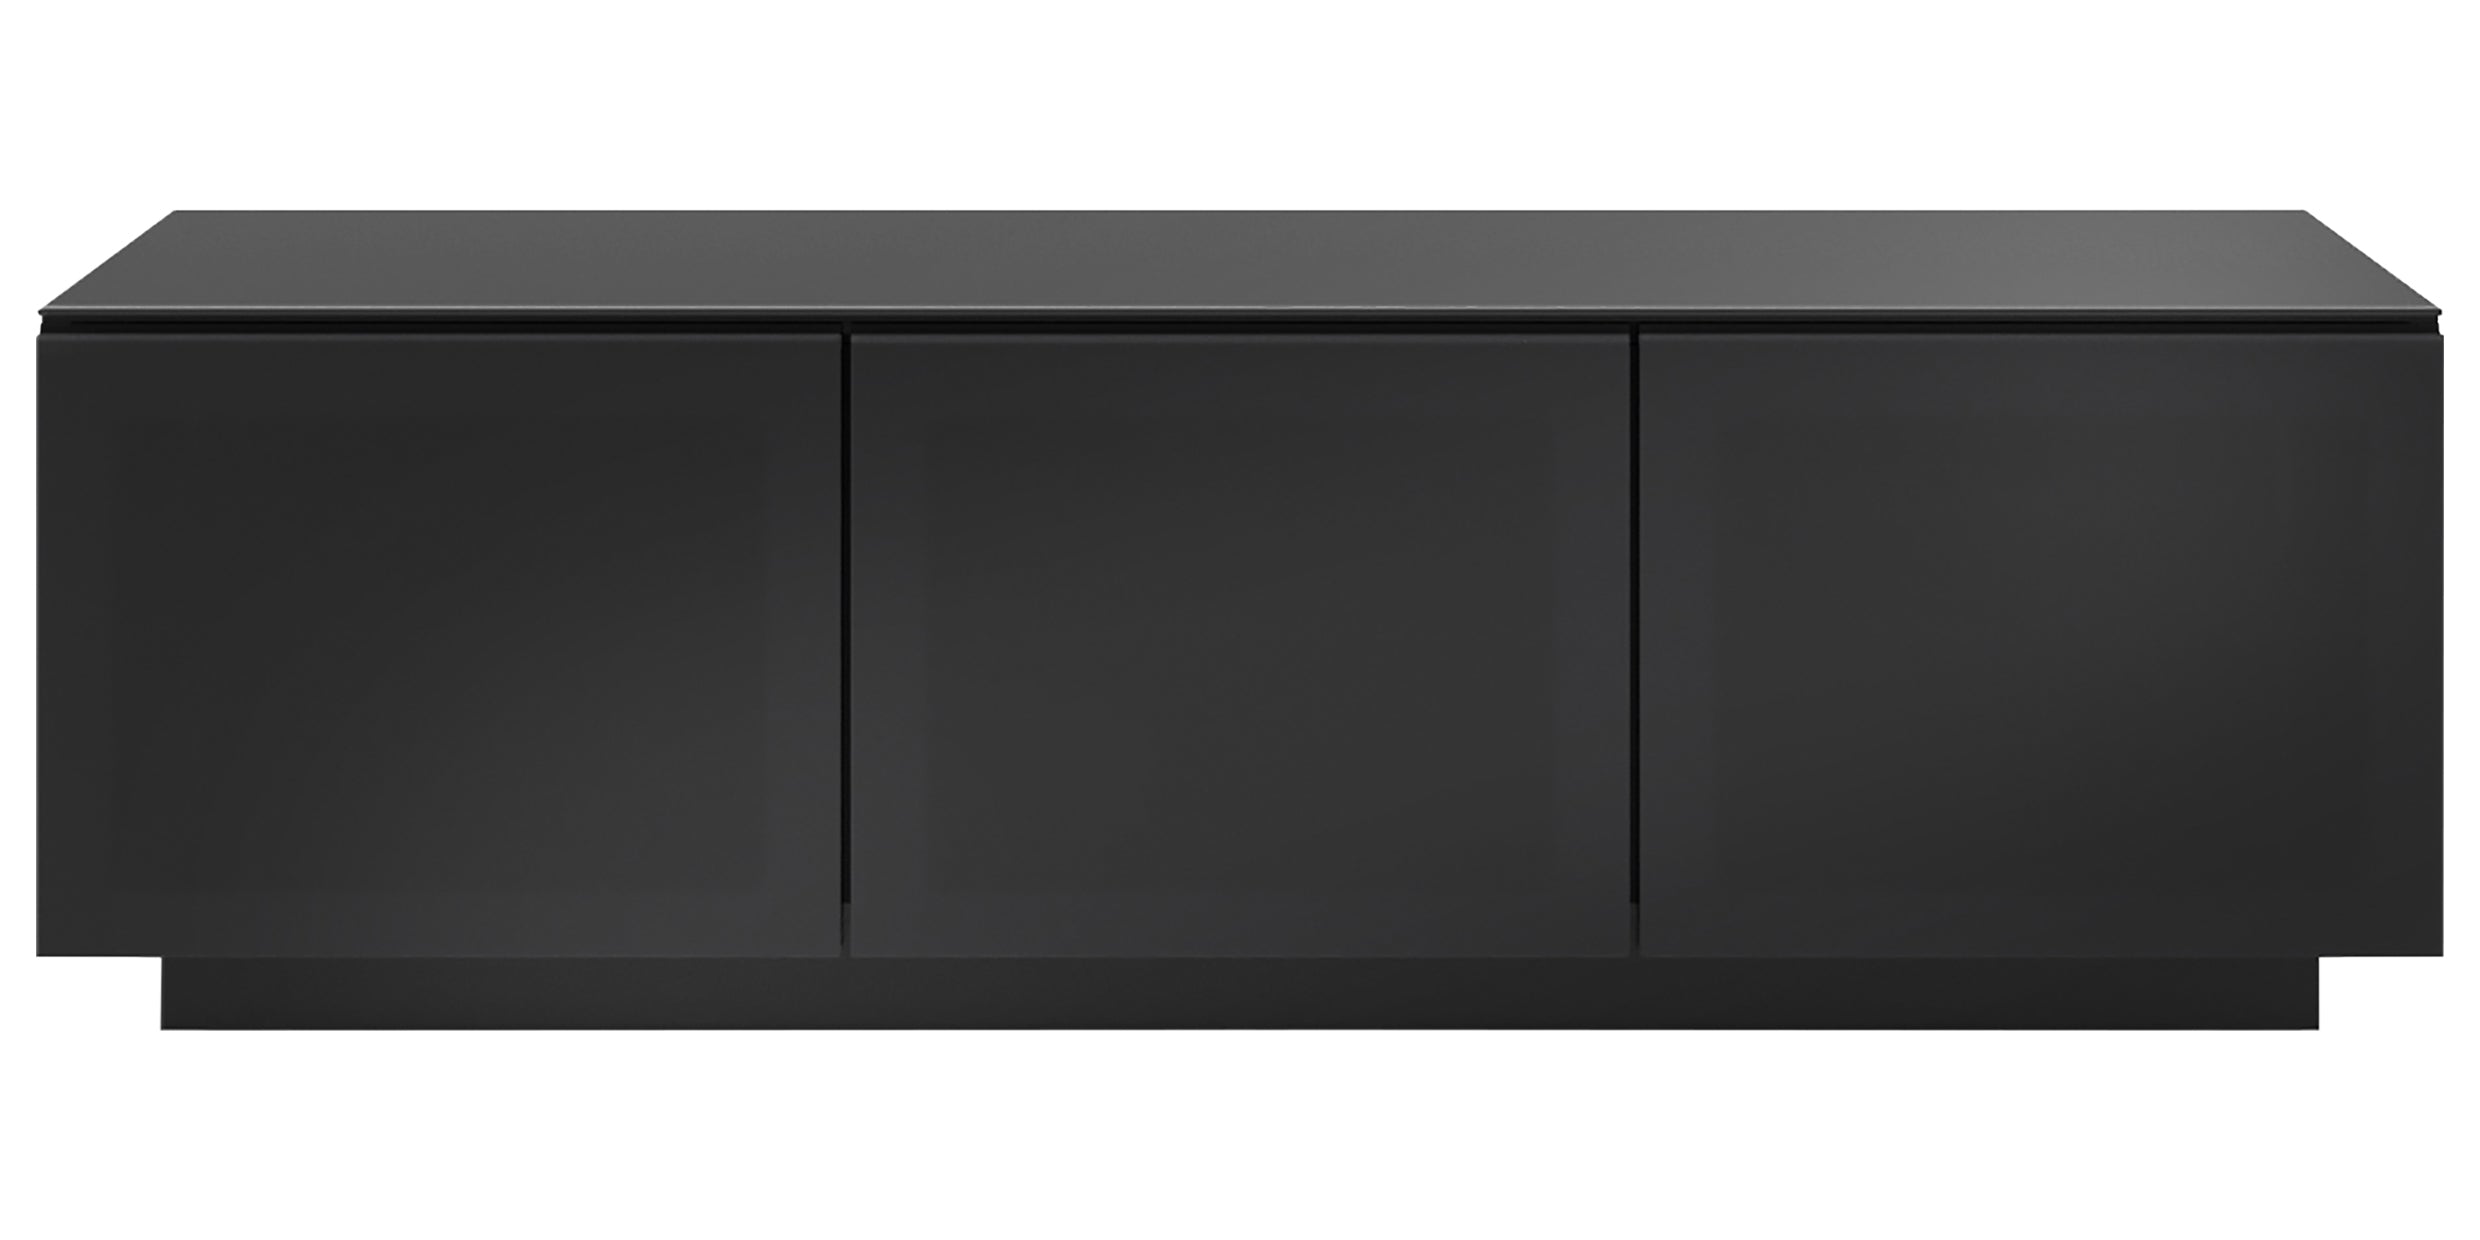 Black Polished Tempered Glass | BDI Mirage Large Media Cabinet | Valley Ridge Furniture